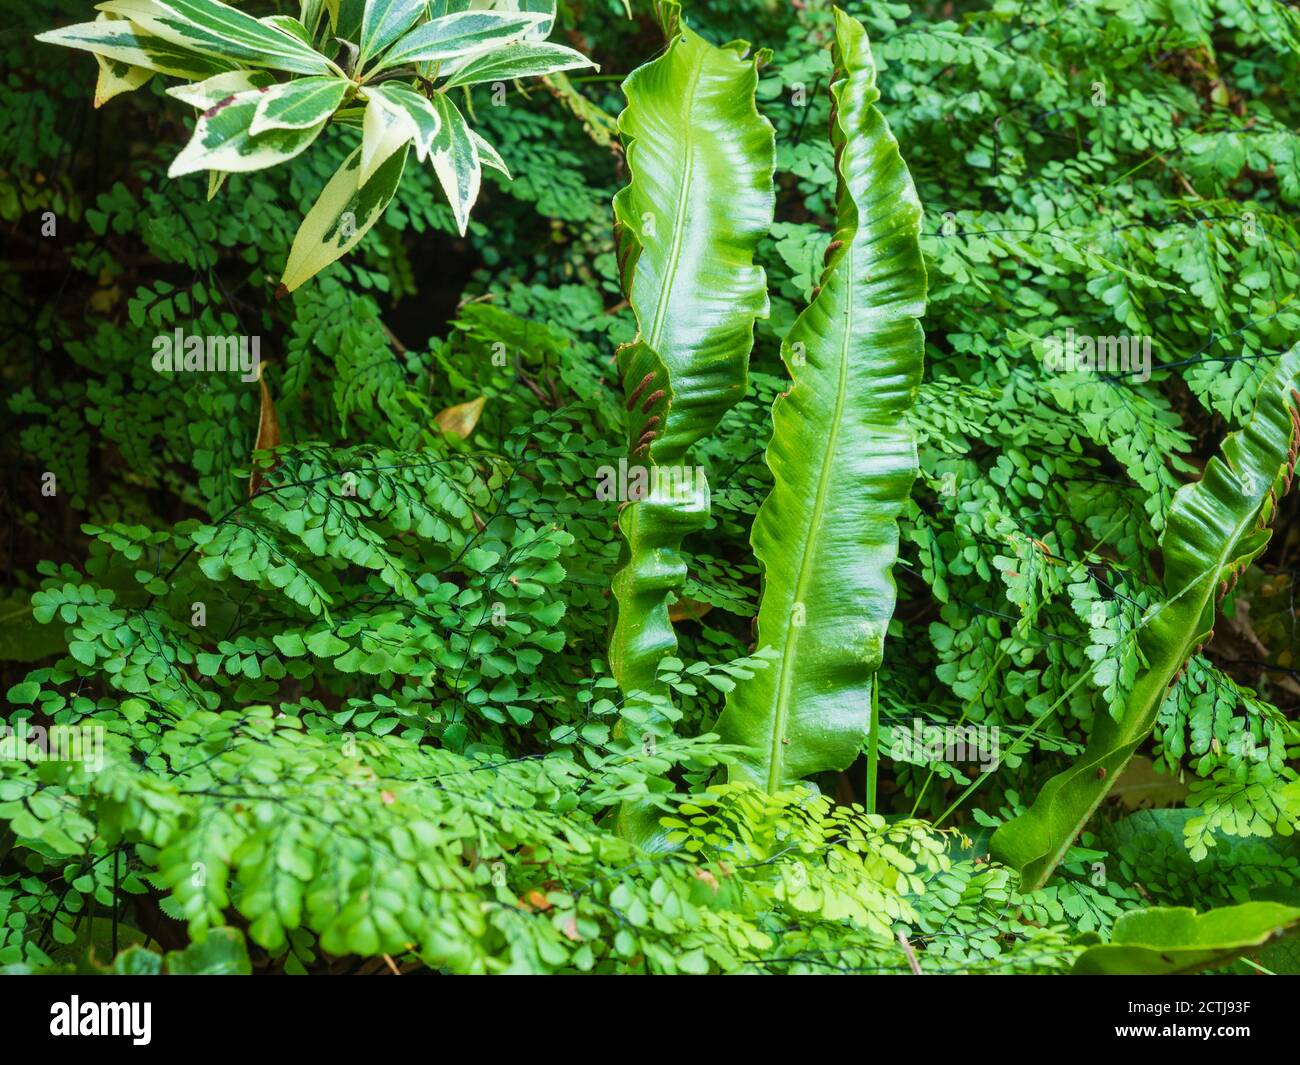 Hardy evergreen shade garden foliage combination with Asplenium scolopendrium and Adiantum venustum growing under variegated Pieris japonica 'Flaming Stock Photo